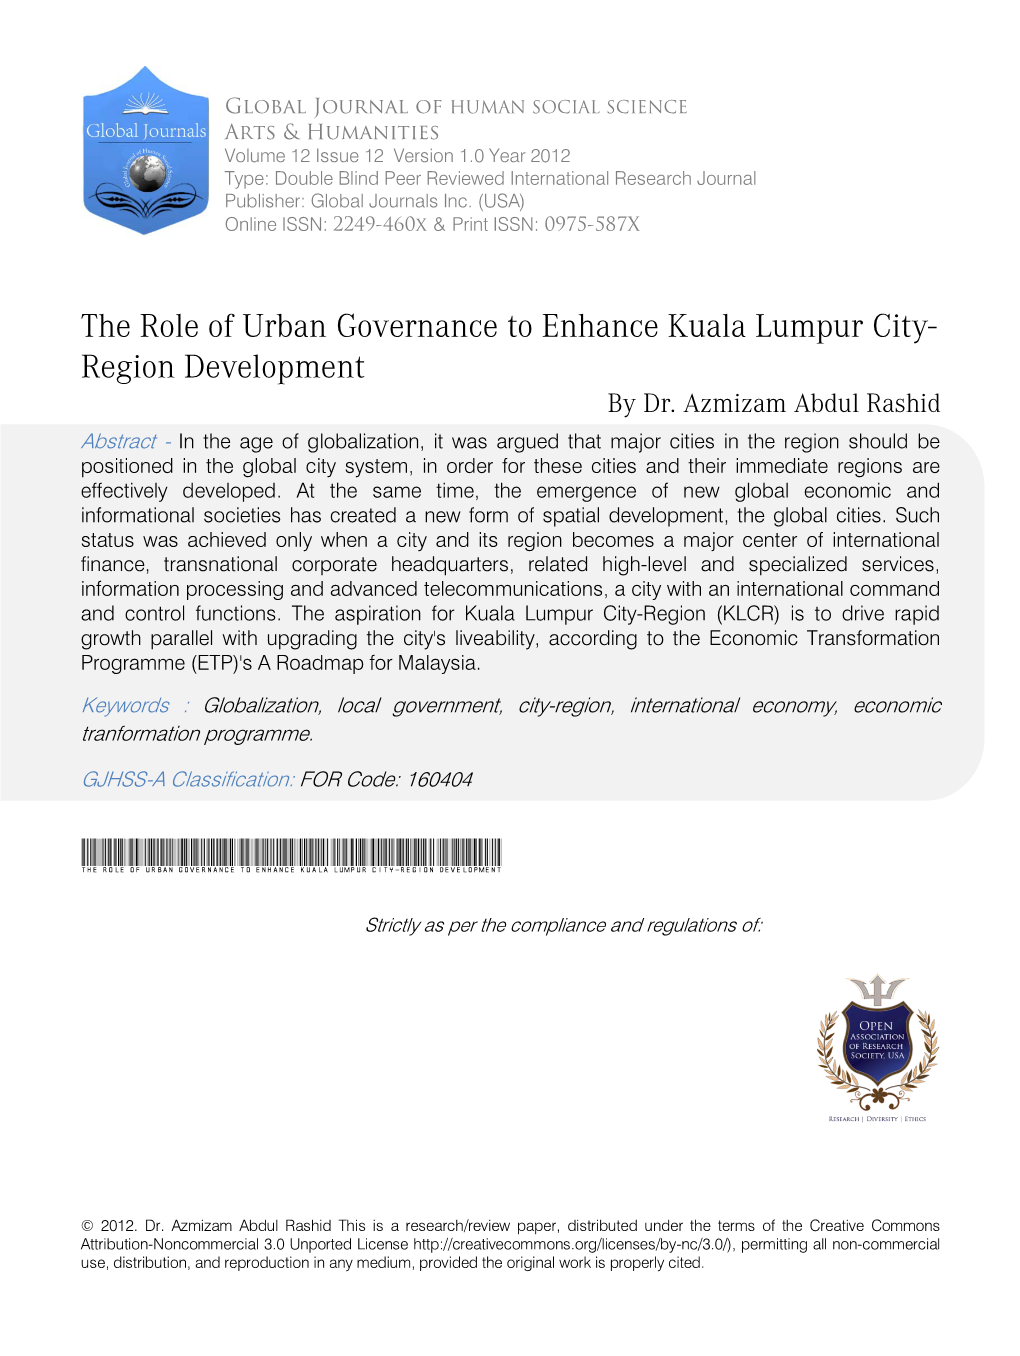 The Role of Urban Governance to Enhance Kuala Lumpur City- Region Development by Dr